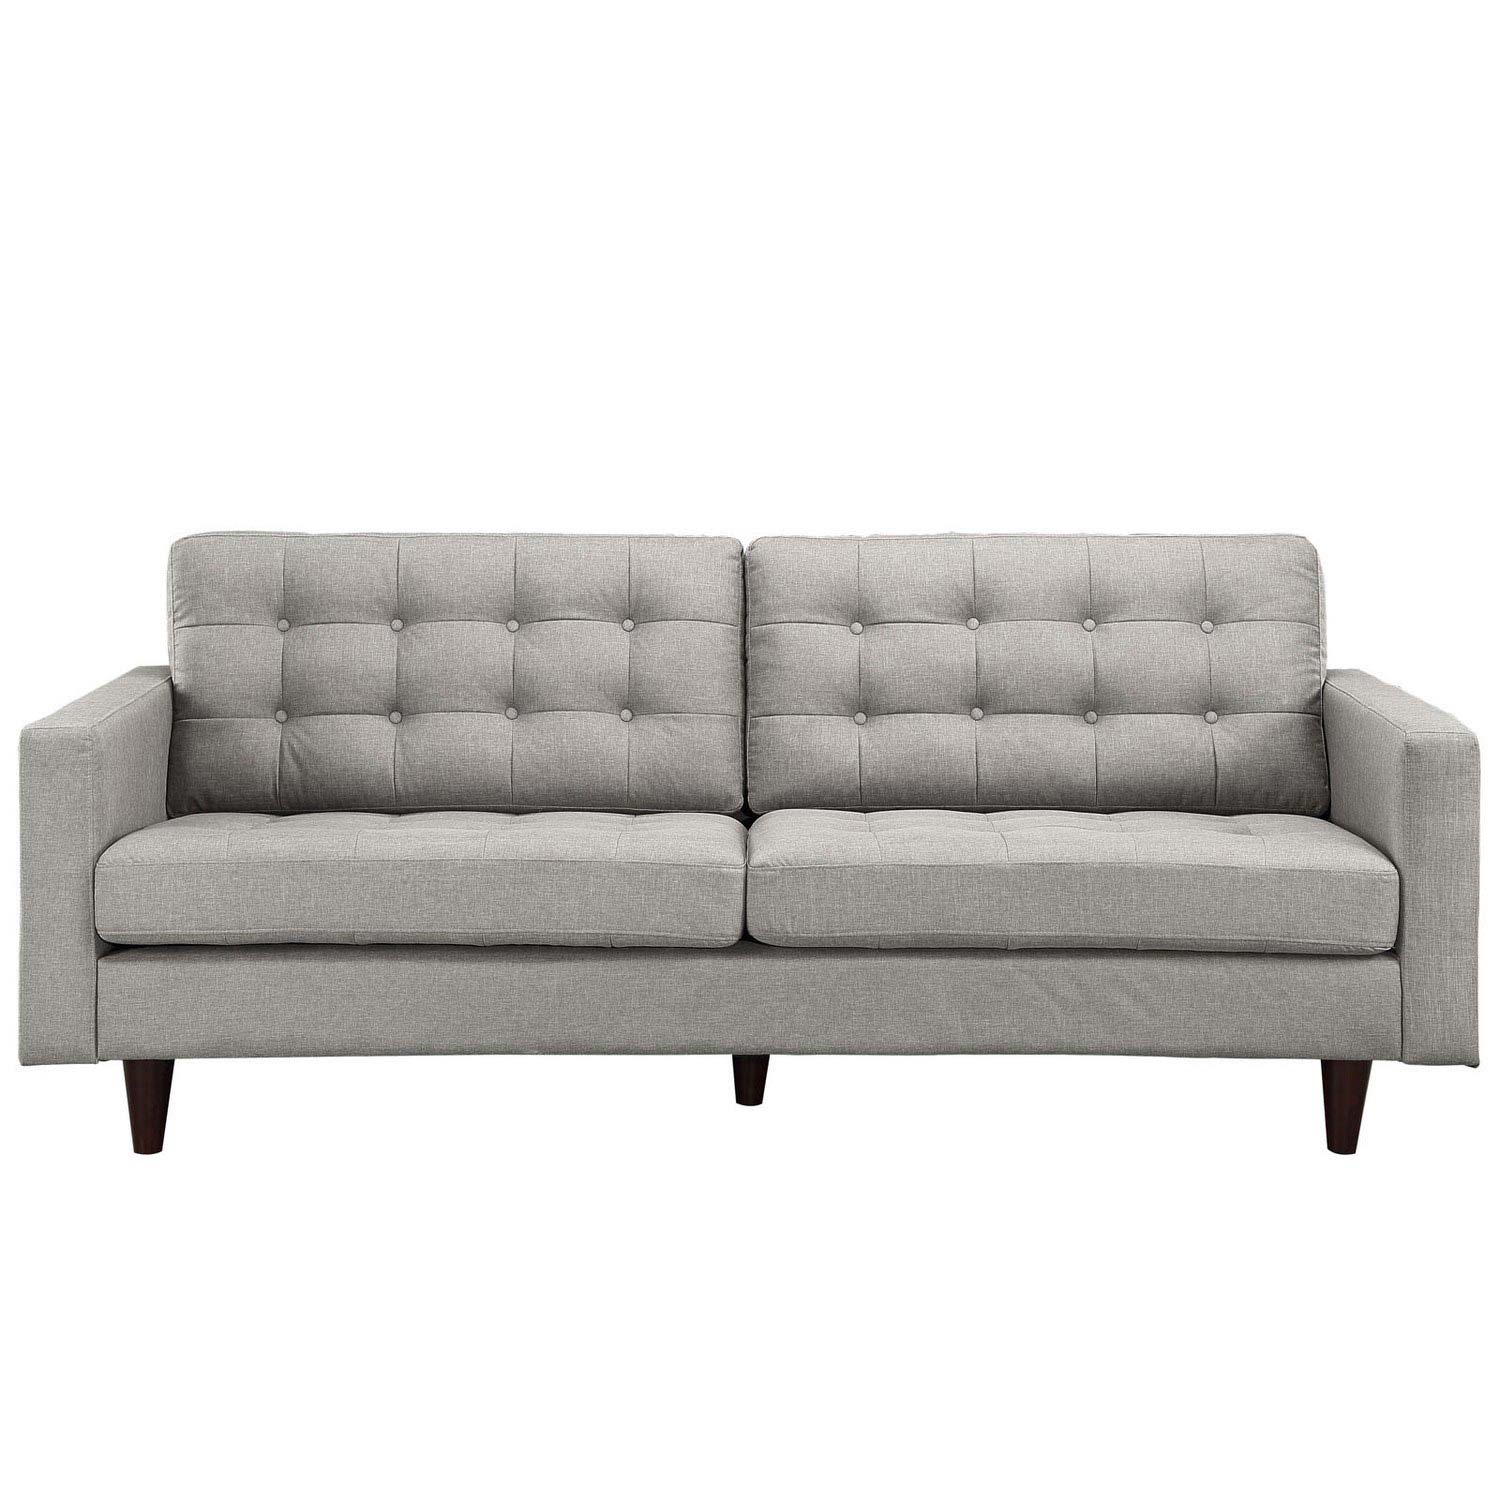 Modway Empress Upholstered Sofa - Light Gray